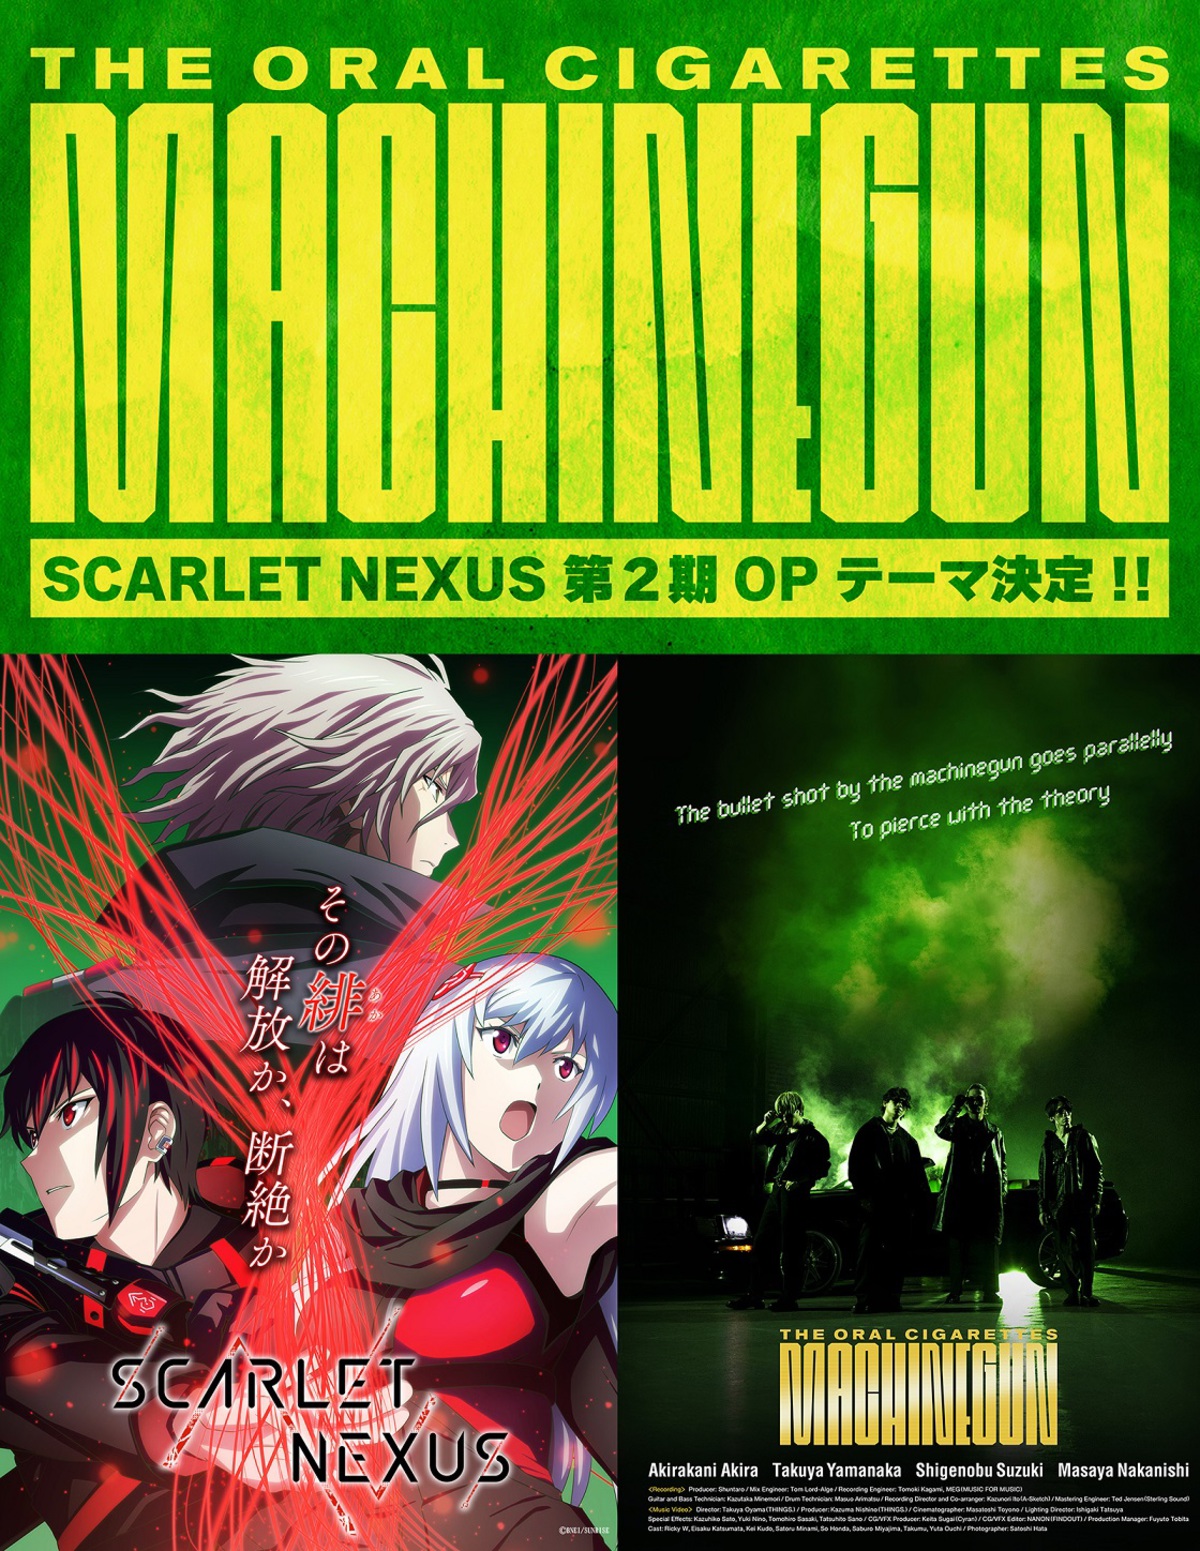 The Oral Cigarettes 10 13リリースの新曲 Machinegun がtvアニメ Scarlet Nexus 第2クールop テーマに決定 予告pv公開